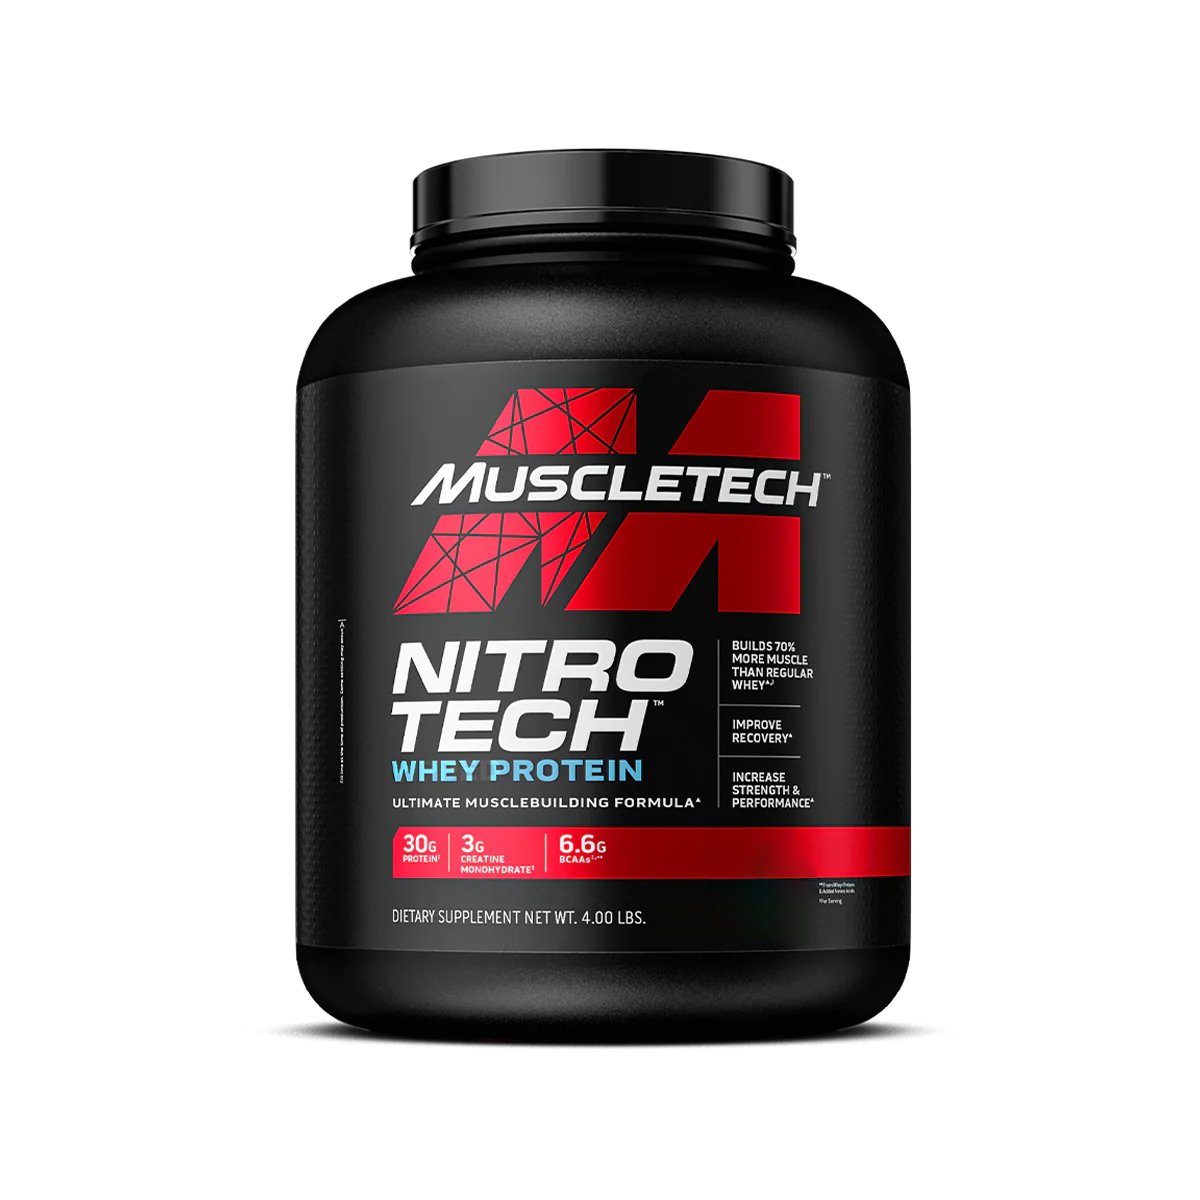 Протеин Muscletech Nitro Tech Whey Protein, 1.81 кг Шоколад,  мл, MuscleTech. Протеин. Набор массы Восстановление Антикатаболические свойства 